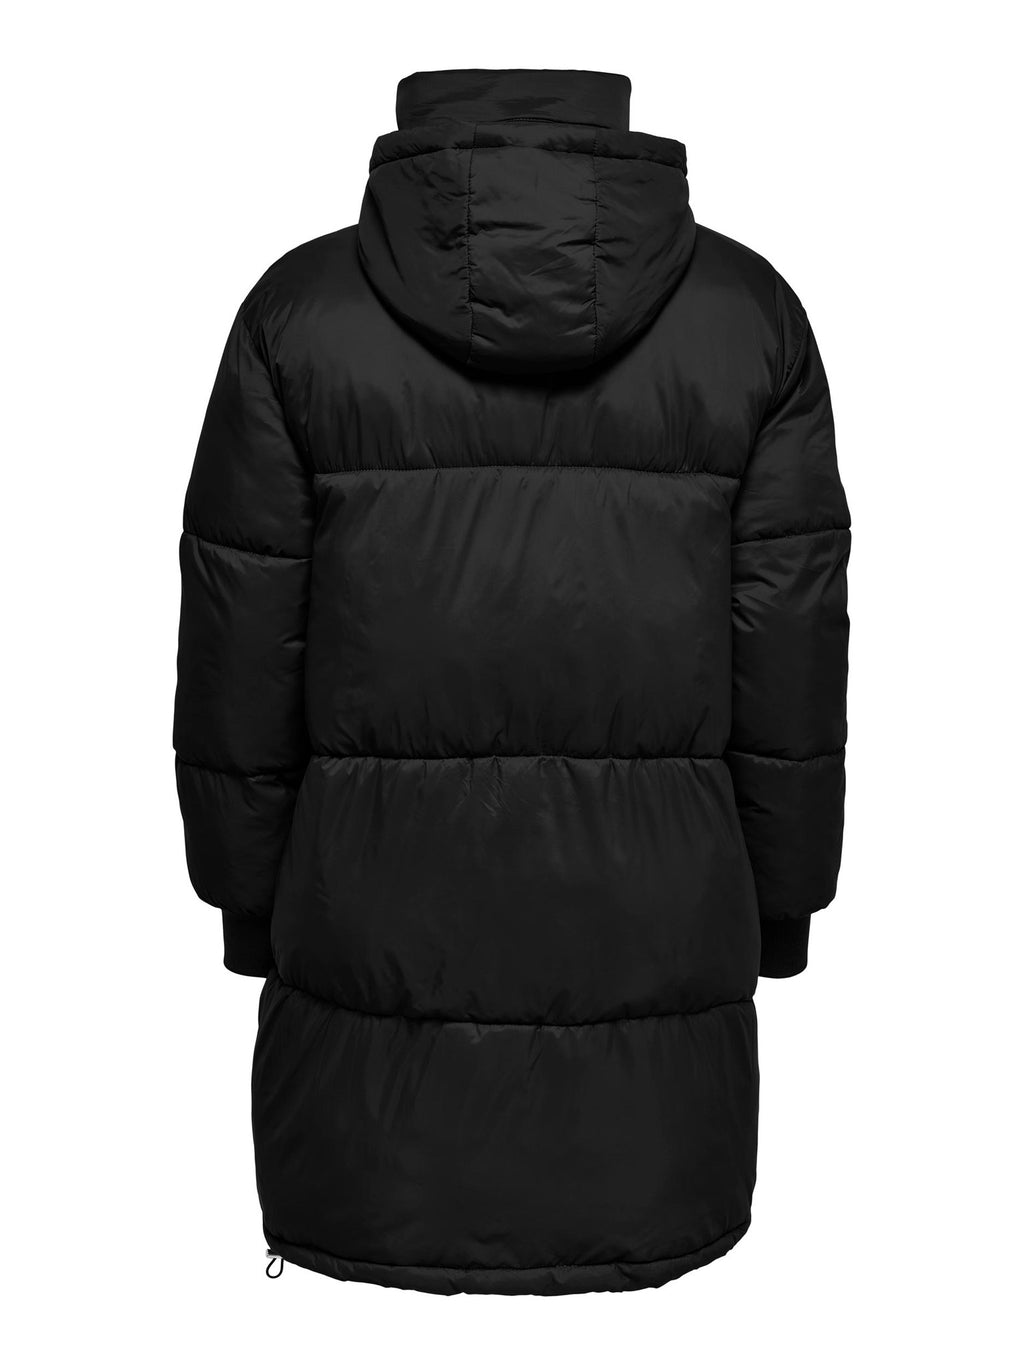 Petra Puffed Jacket - Black